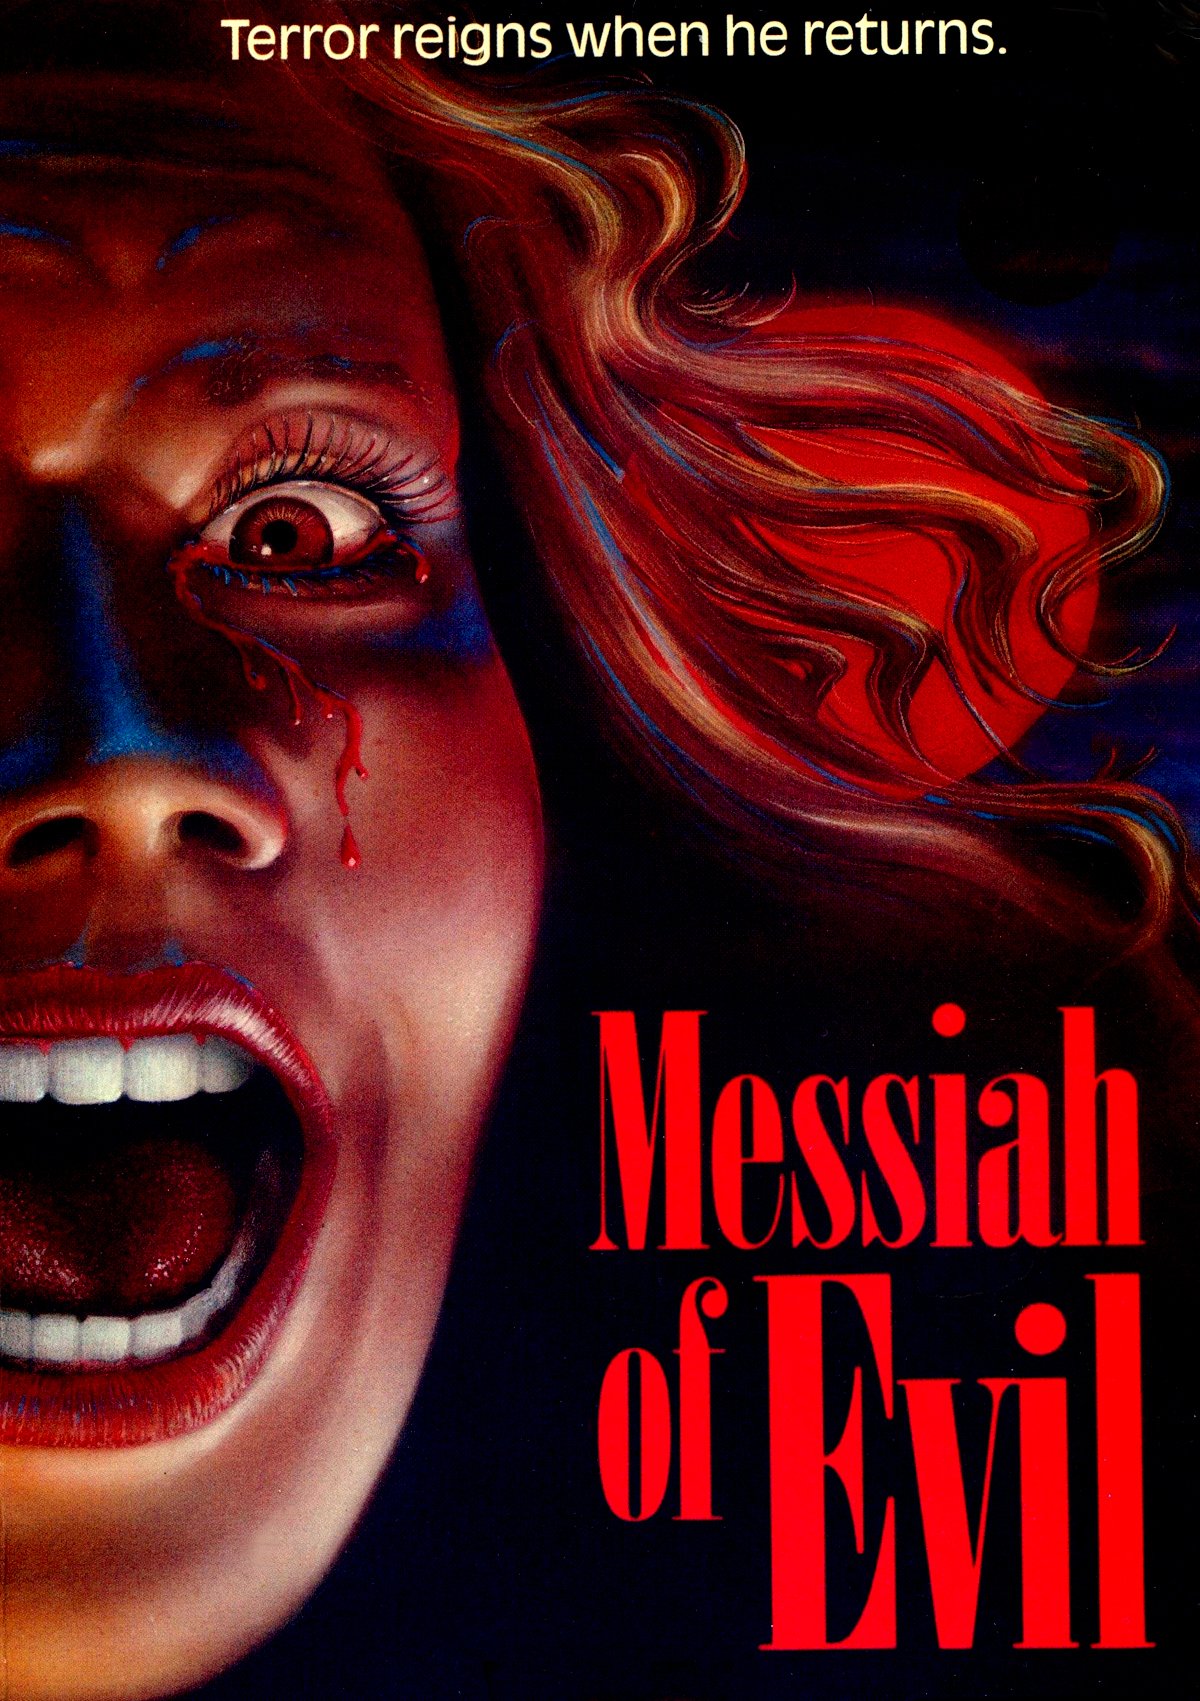 Terror Reigns When He Returns - Messiah of Evil (1973)